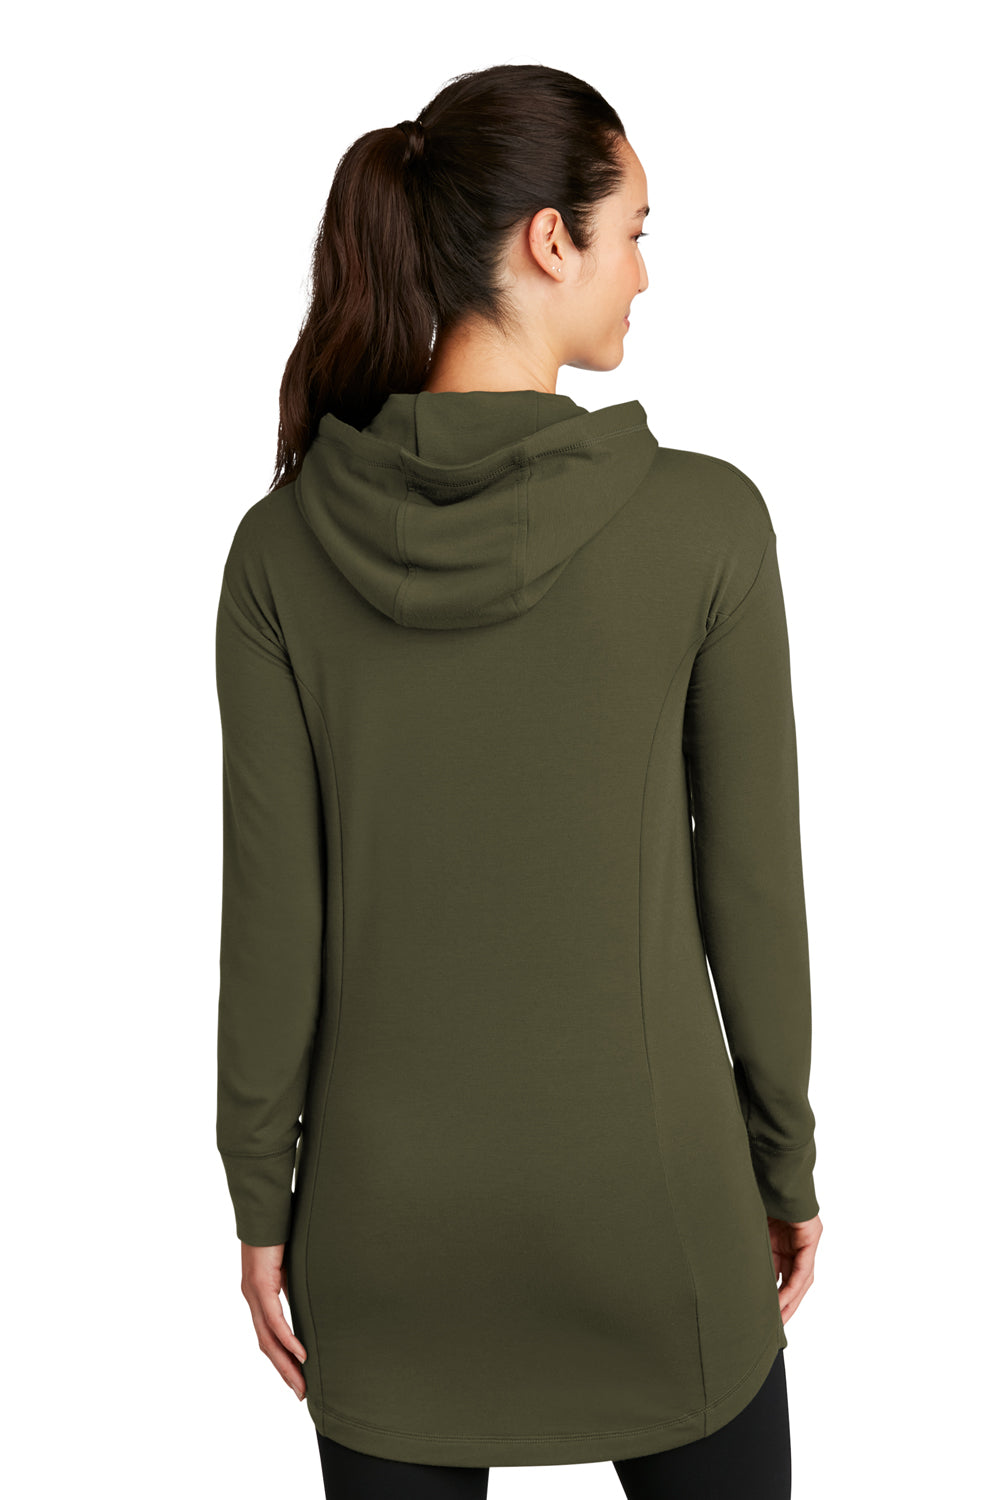 Ogio LOG827 Womens Luuma Flex Long Sleeve Hooded Sweatshirt Hoodie Deep Olive Green Back